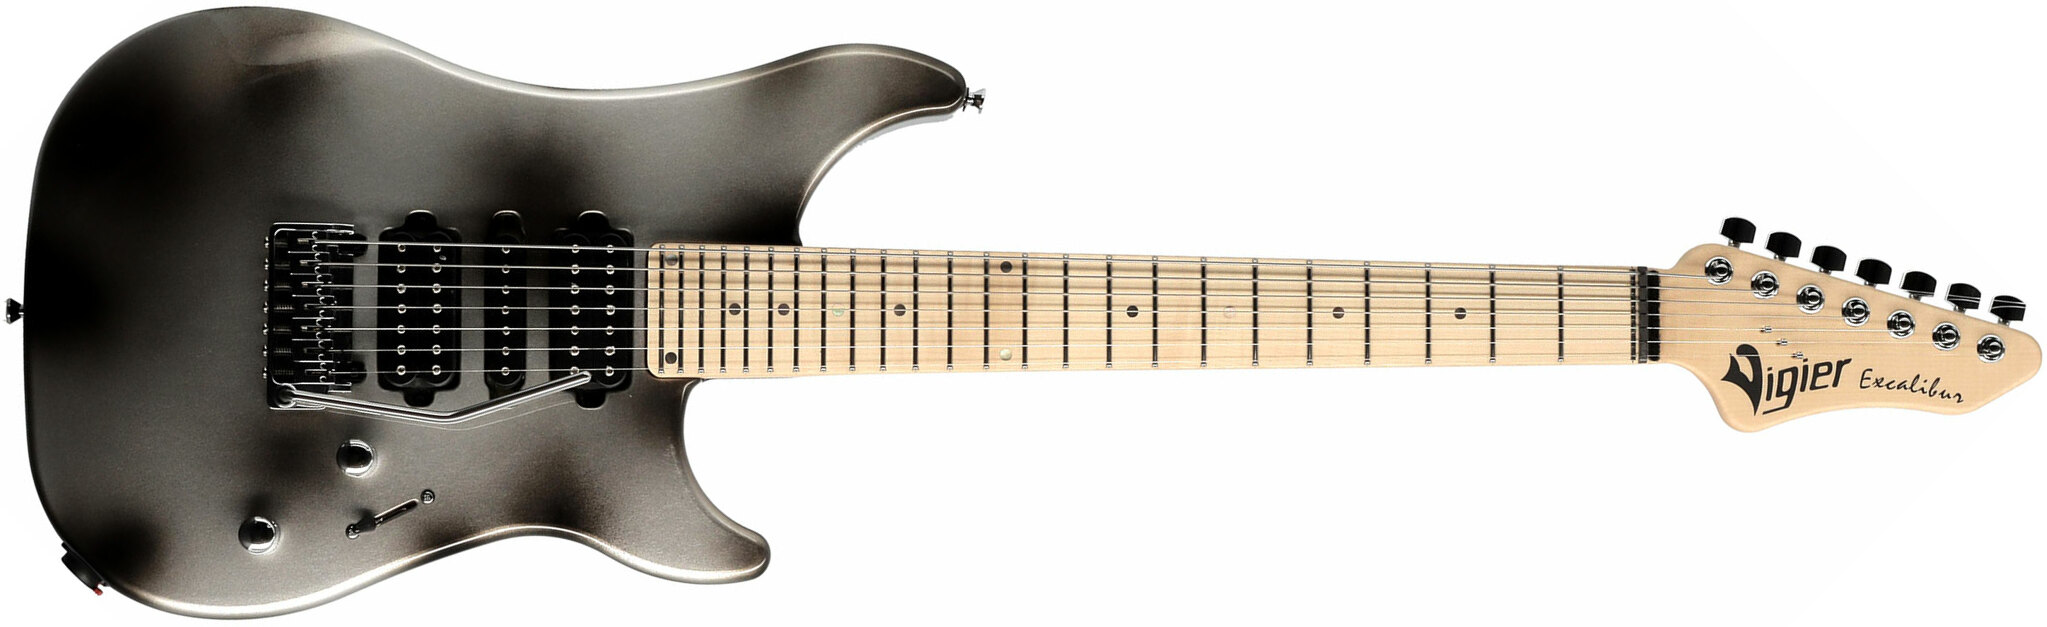 Vigier Excalibur Supra 7c Hsh Trem Mn - Urban Metal - 7-snarige elektrische gitaar - Main picture